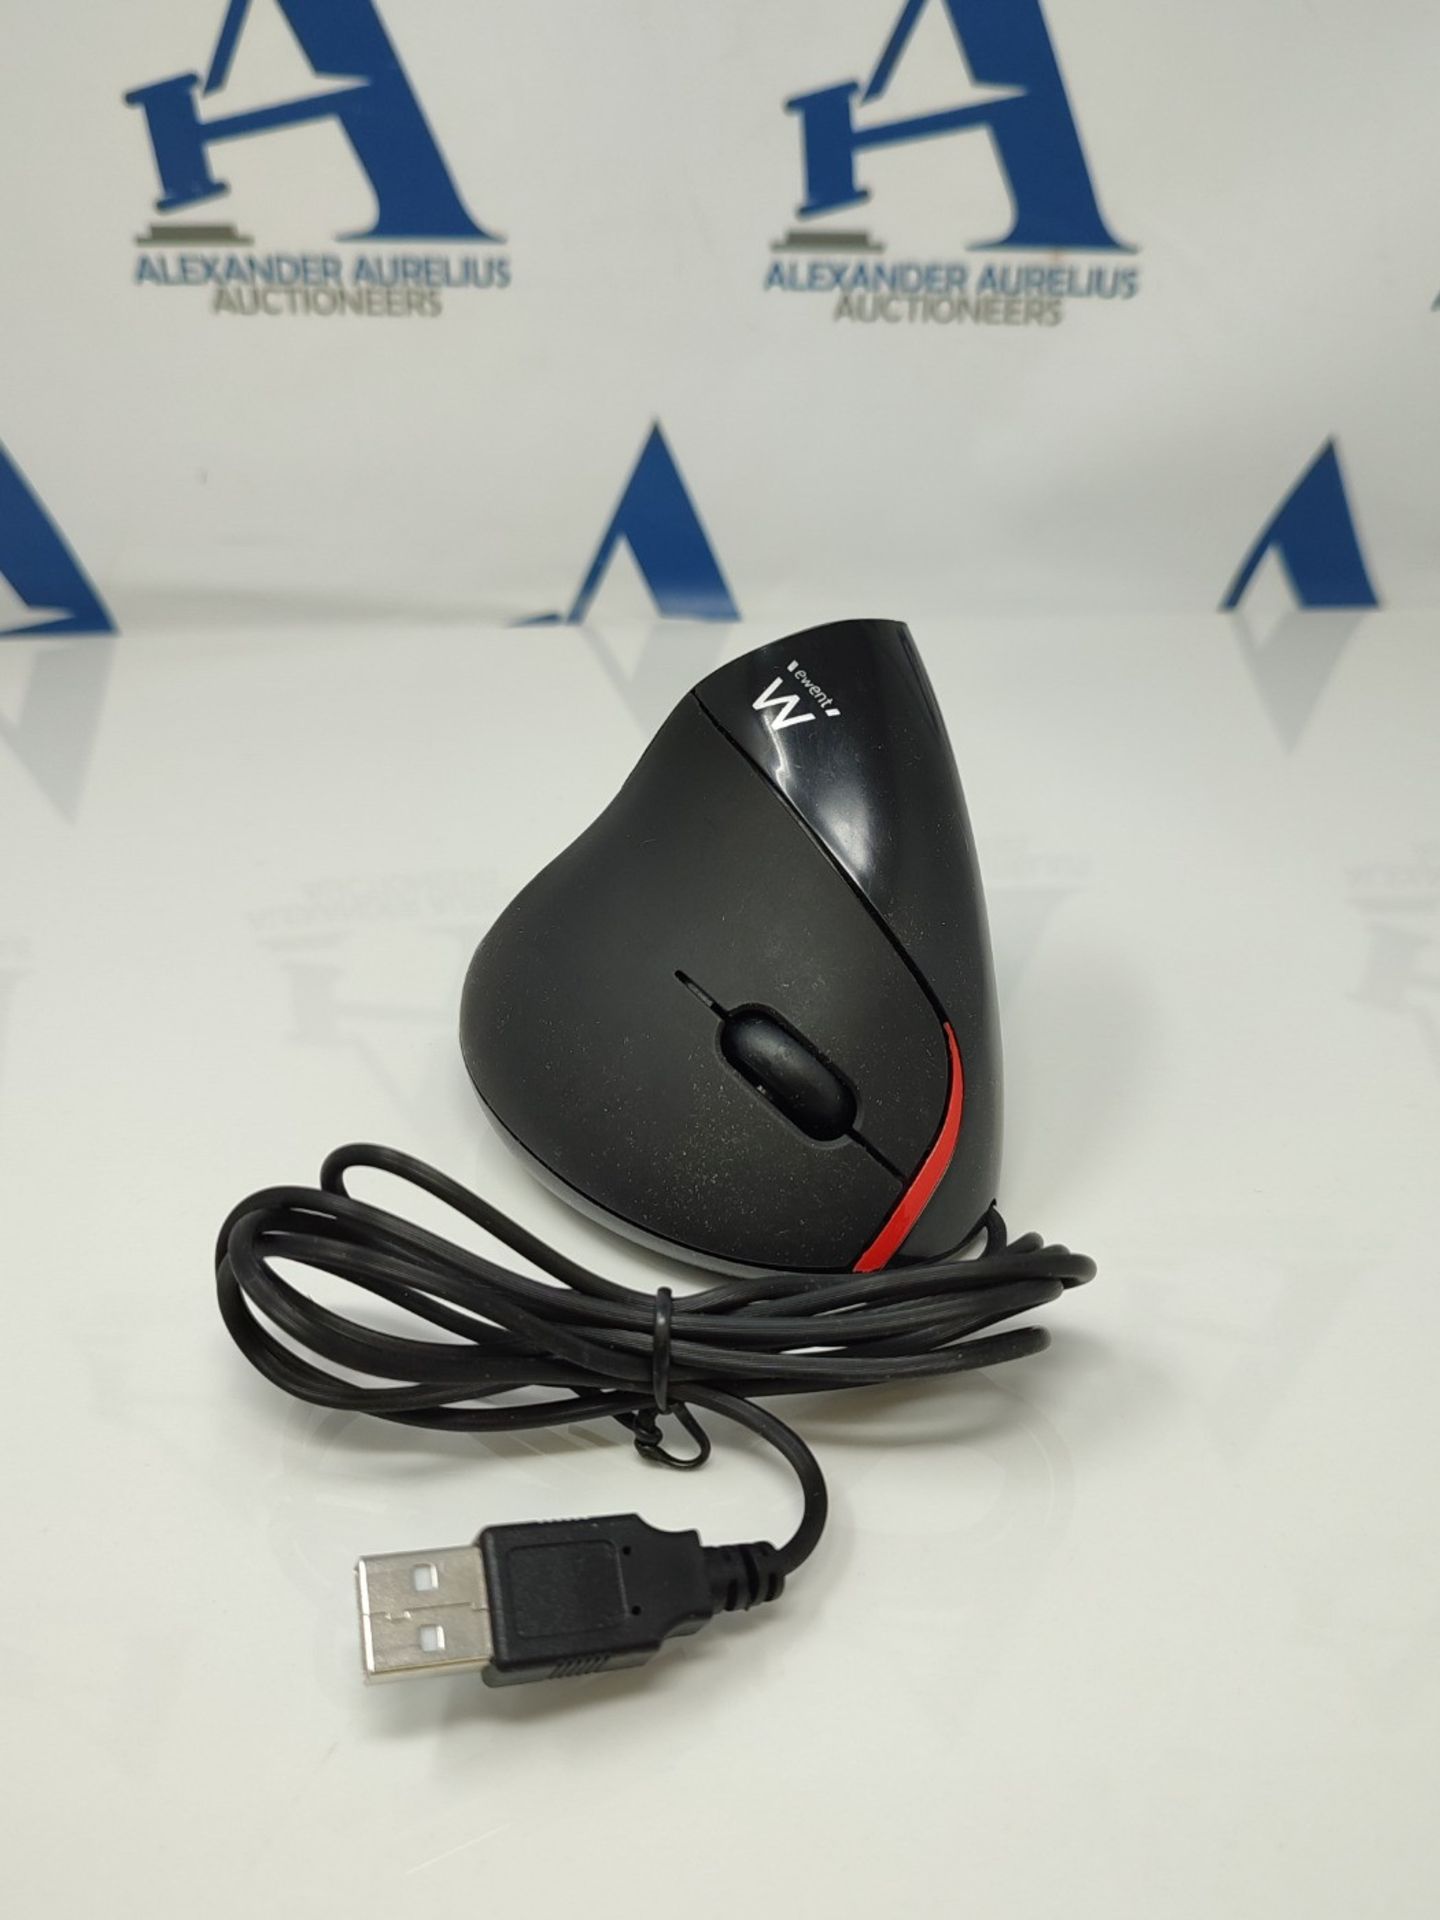 Ewent-vertical ergonomic mouse ew3156 - Image 2 of 3